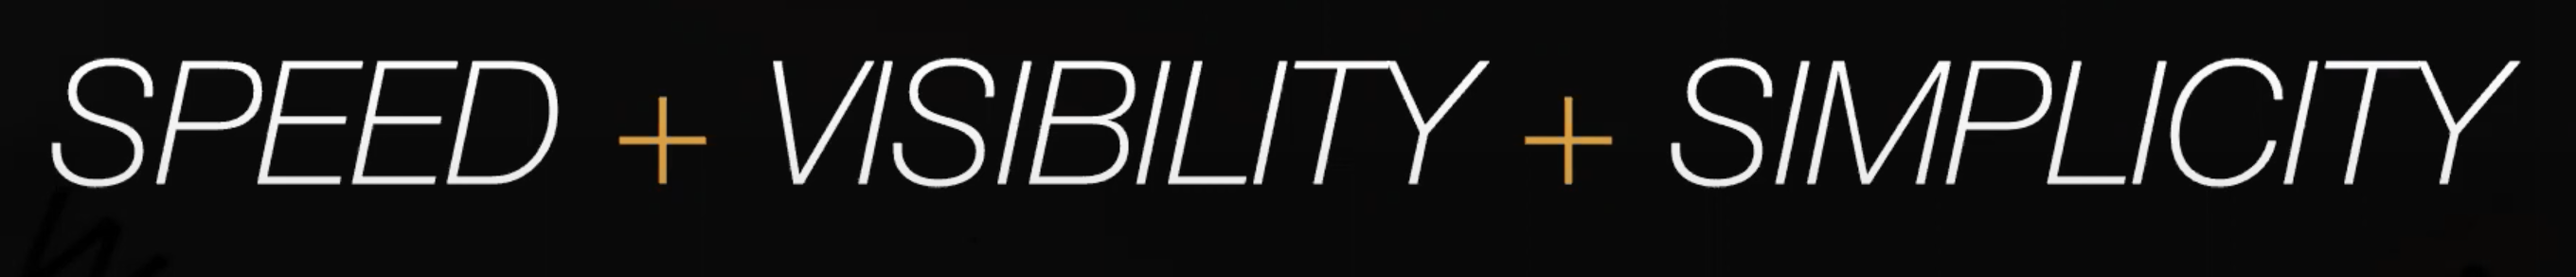 speedvisibilitysimplicity